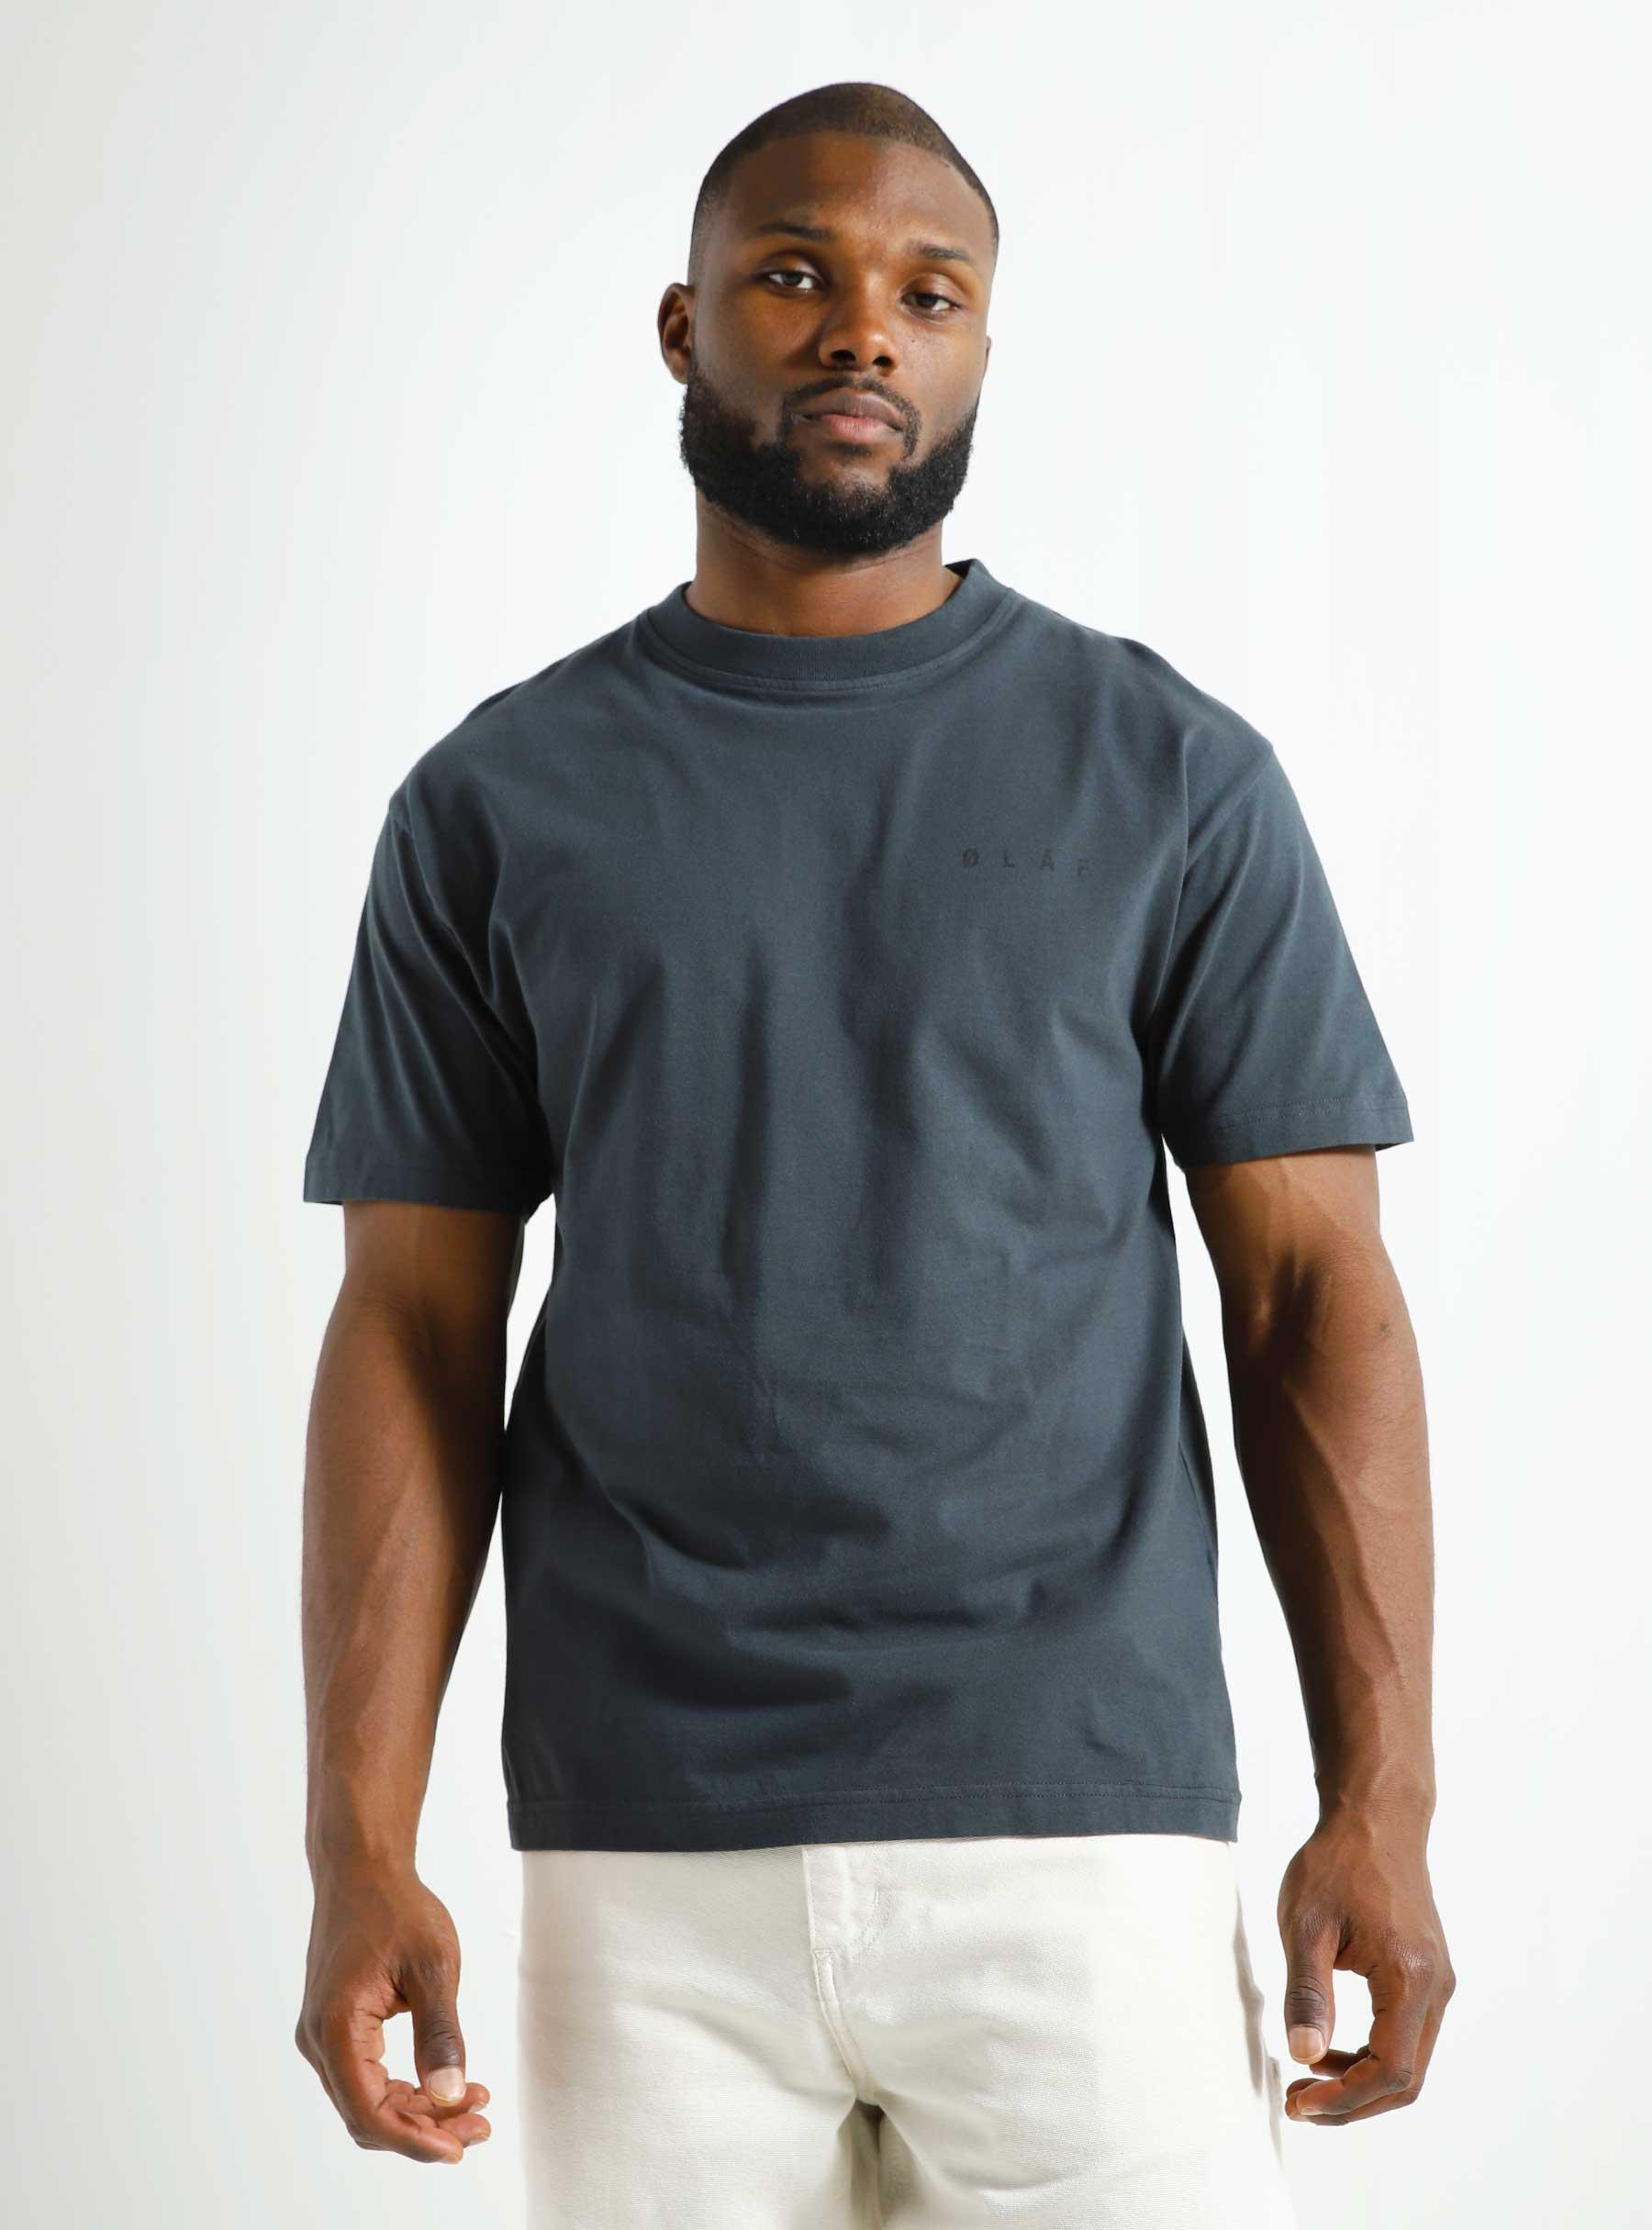 Blur Face T-shirt Slate Grey M150102